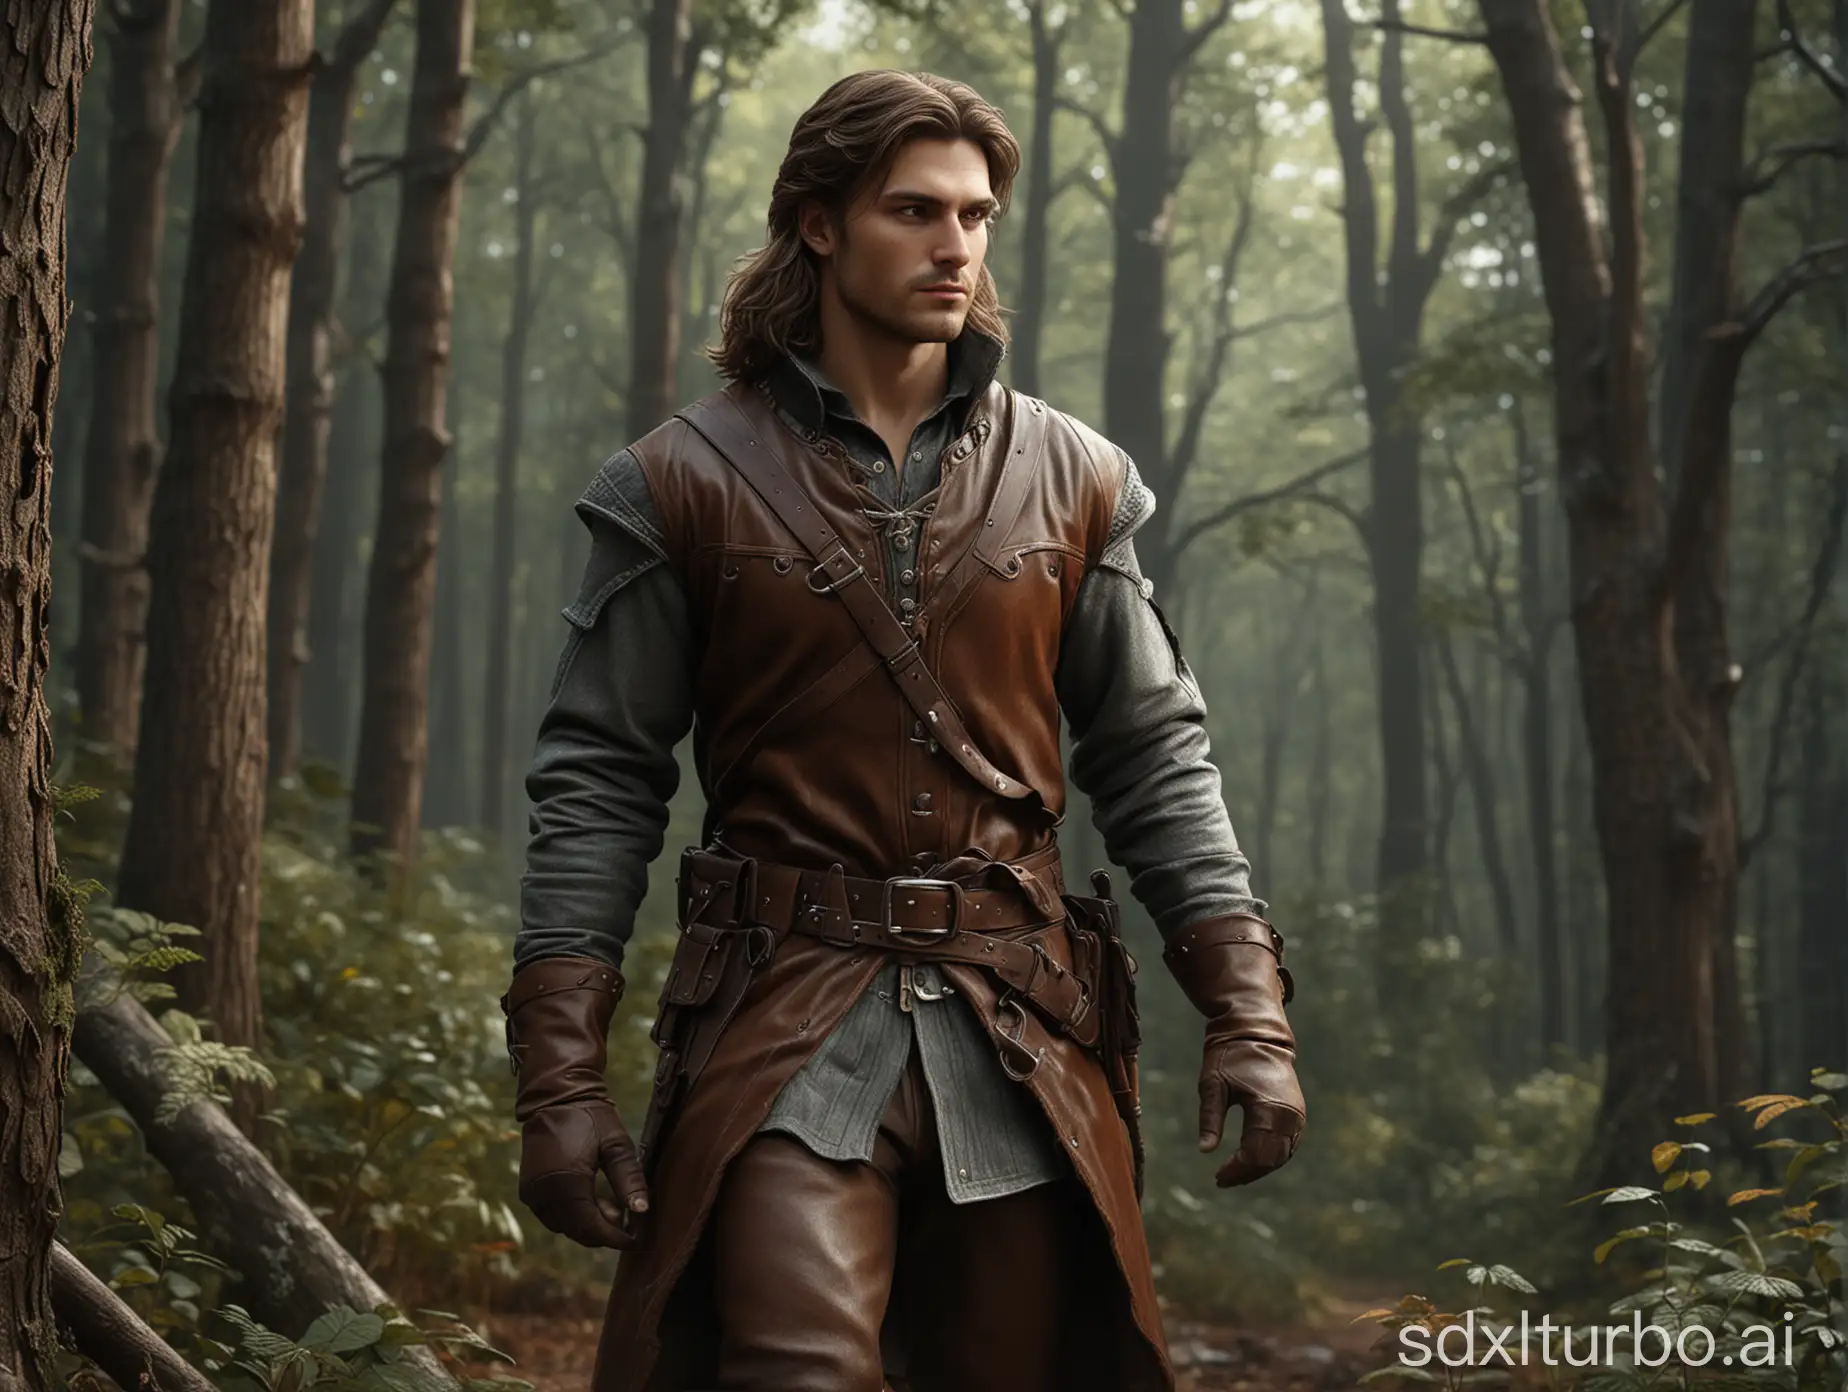 Handsome-Medieval-Hunter-Searching-in-Forest-Detailed-Octane-Render-Concept-Art